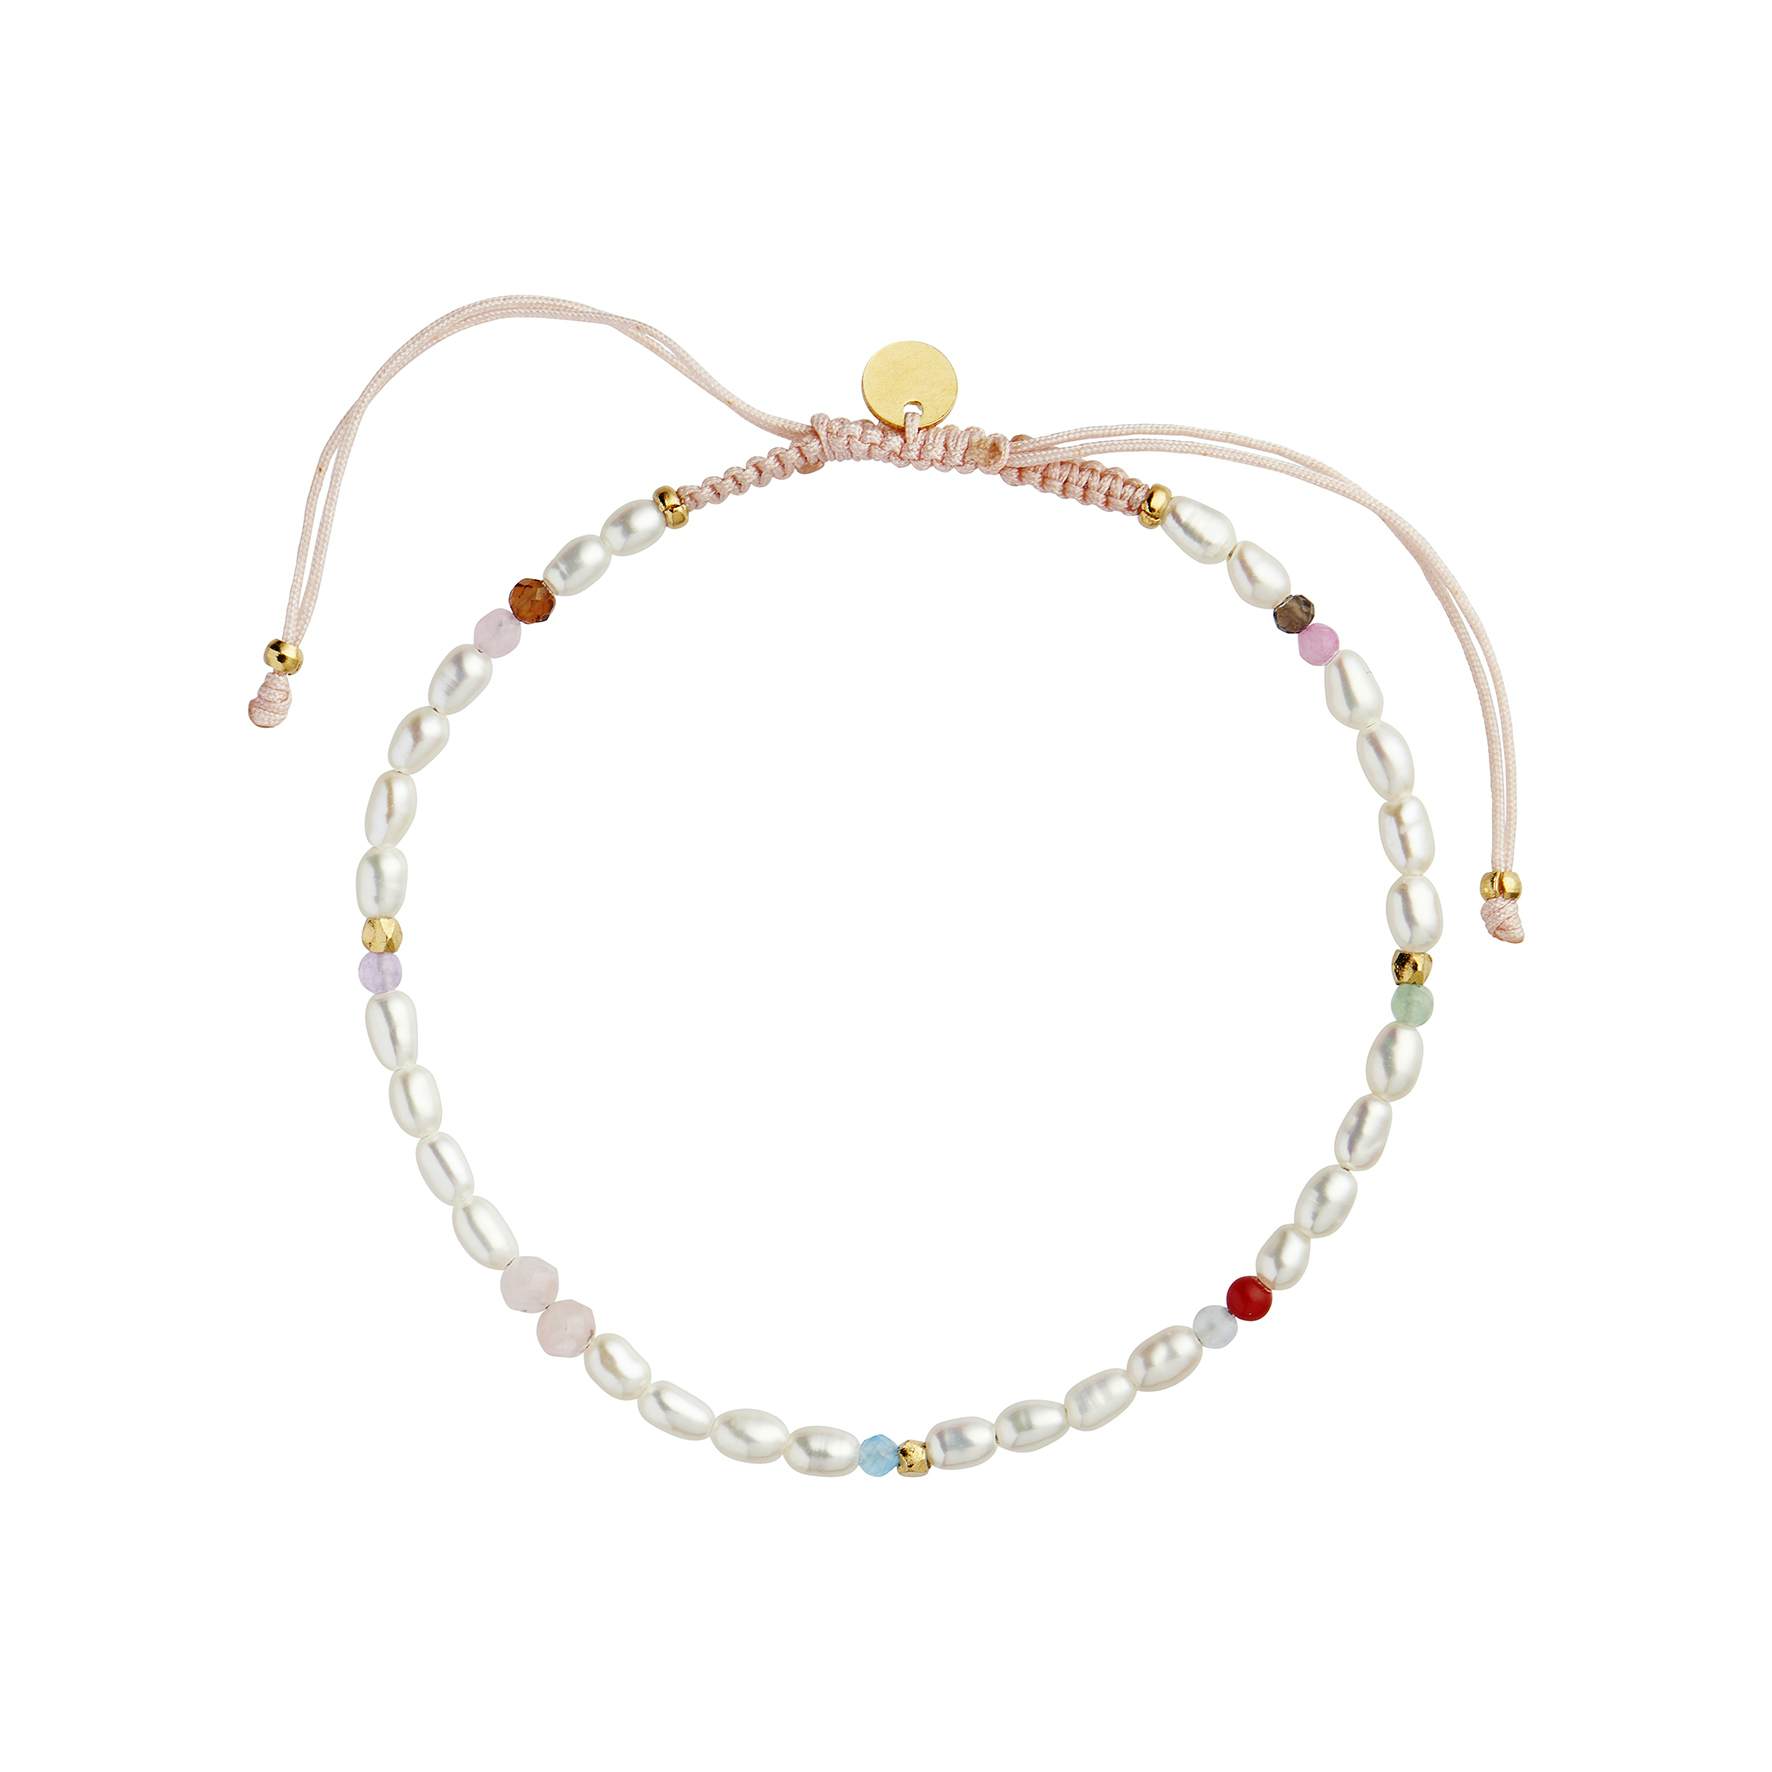 Confetti Pearl Bracelet With Pink Pastel Mix With Pink Ribbon från STINE A Jewelry i Nylon